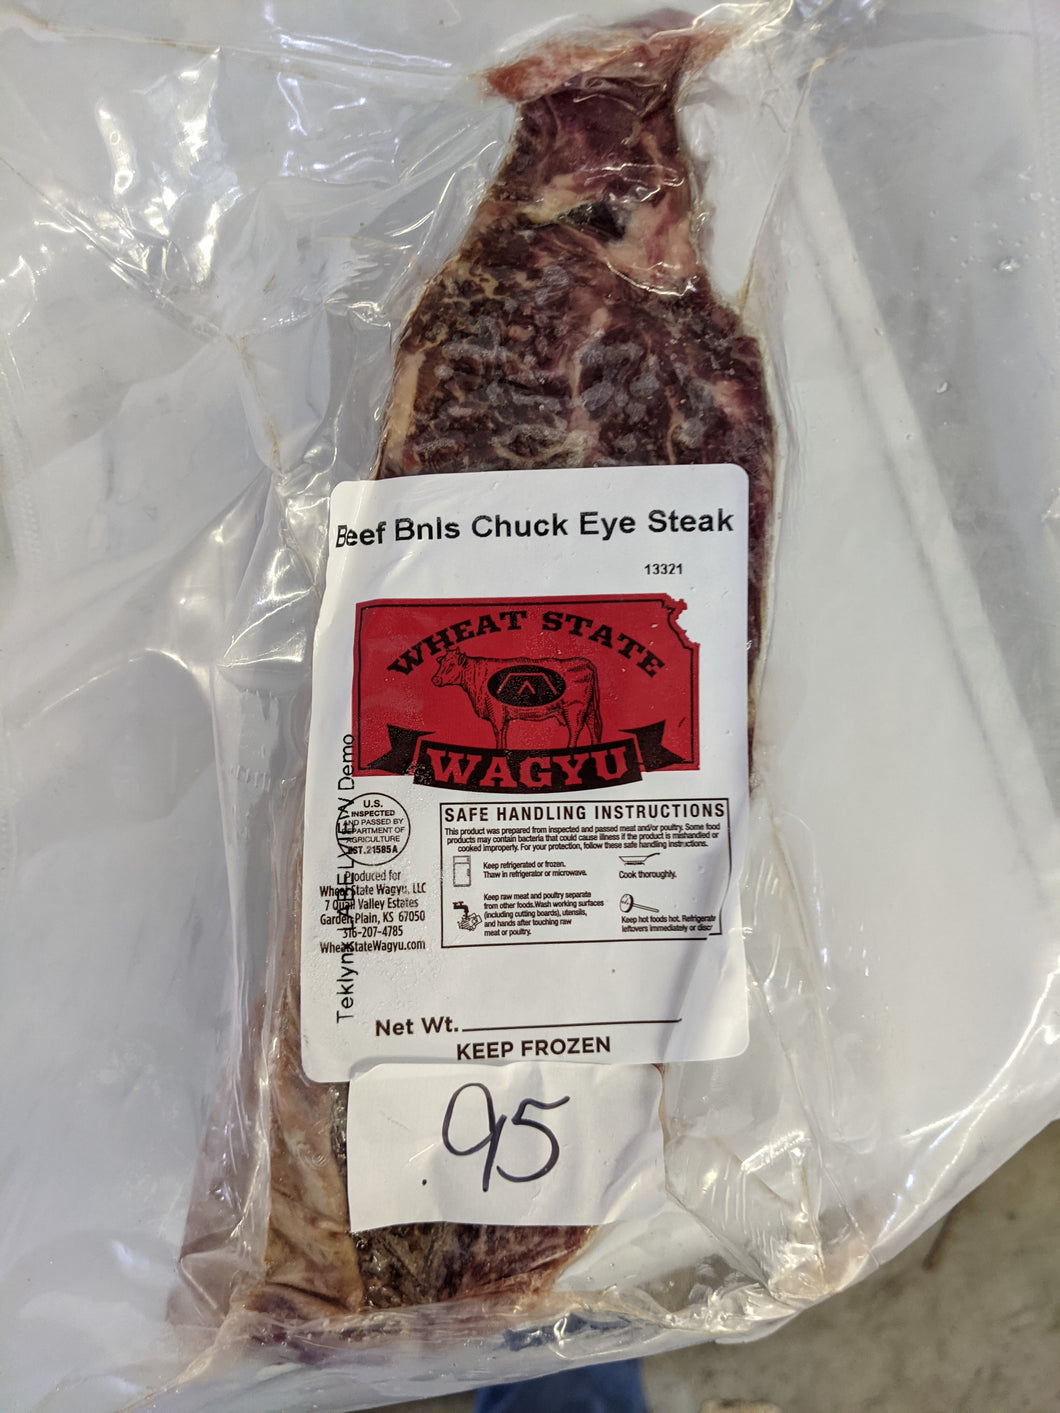 Full Blood Beef Boneless Chuck Eye Steak .95 - 1.28 pounds